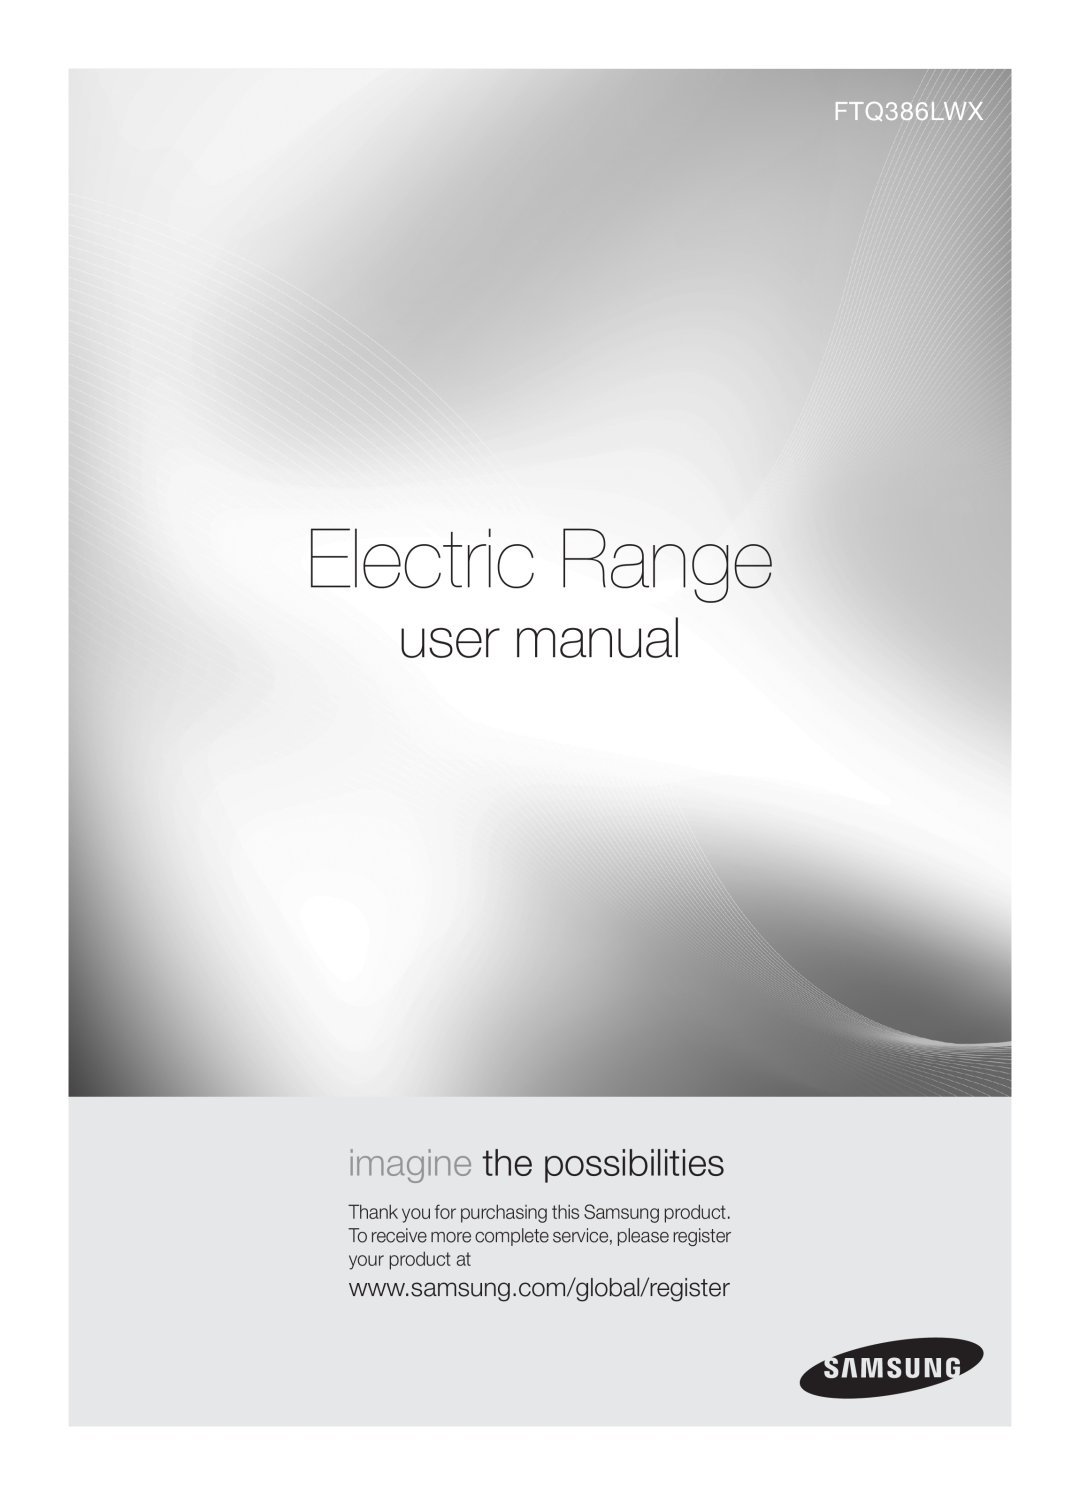 Samsung FTQ386LWX user manual Electric Range, imagine the possibilities 